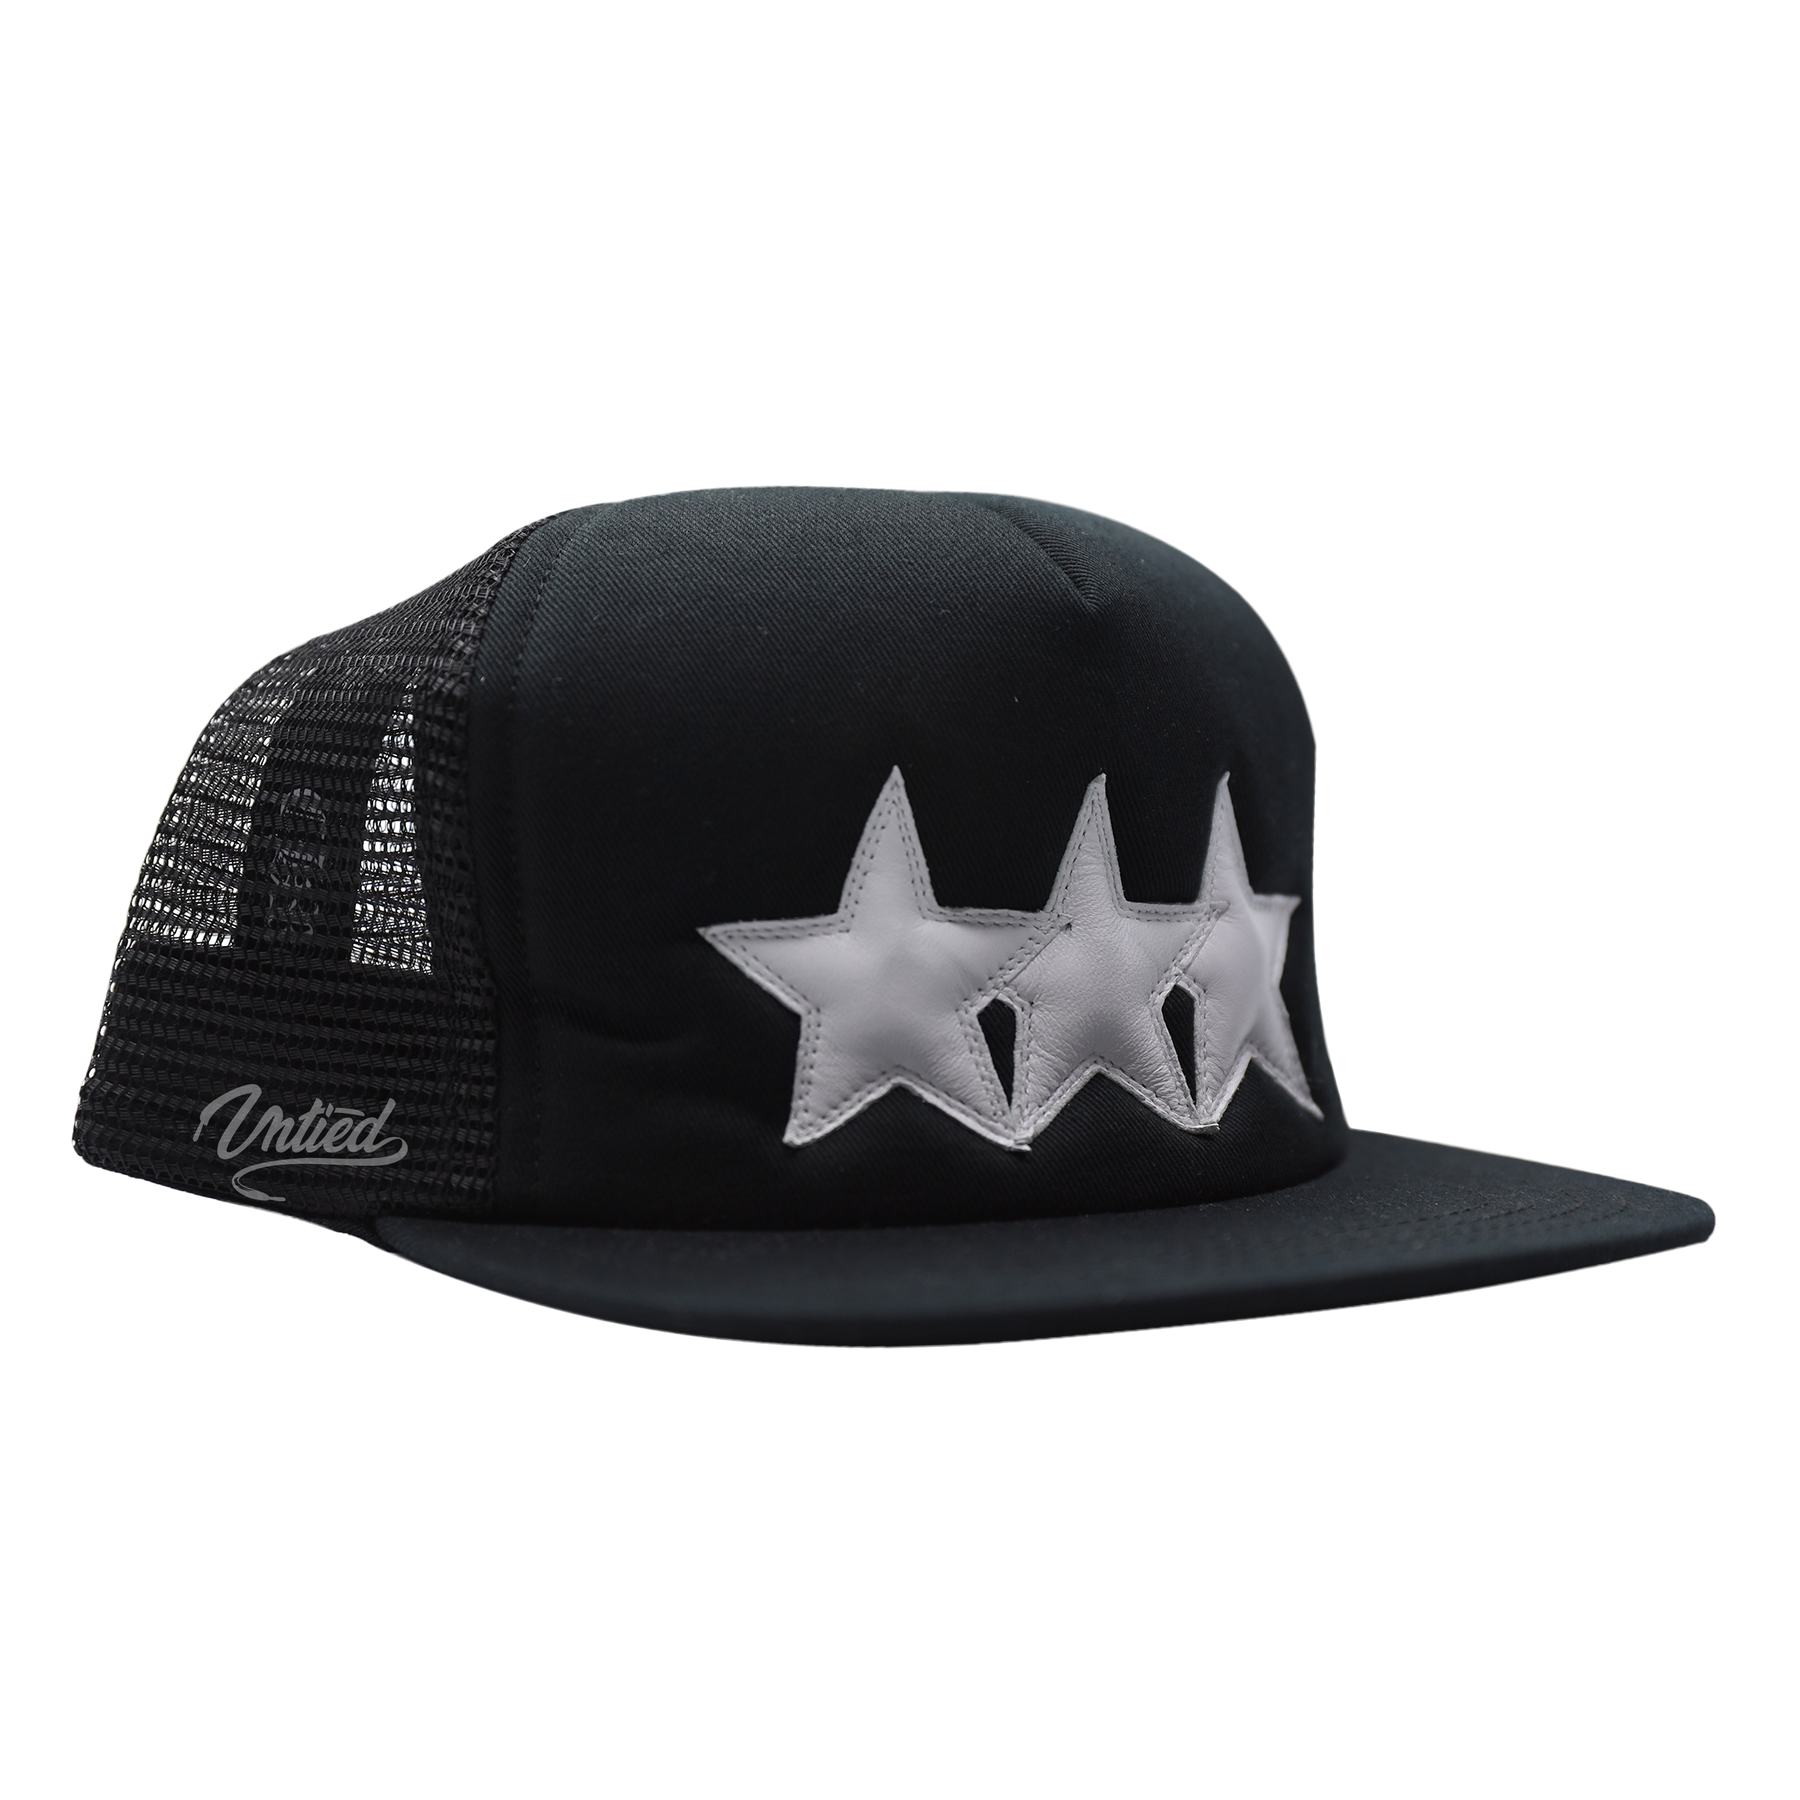 Chrome Hearts Trucker Hat "3 Star"